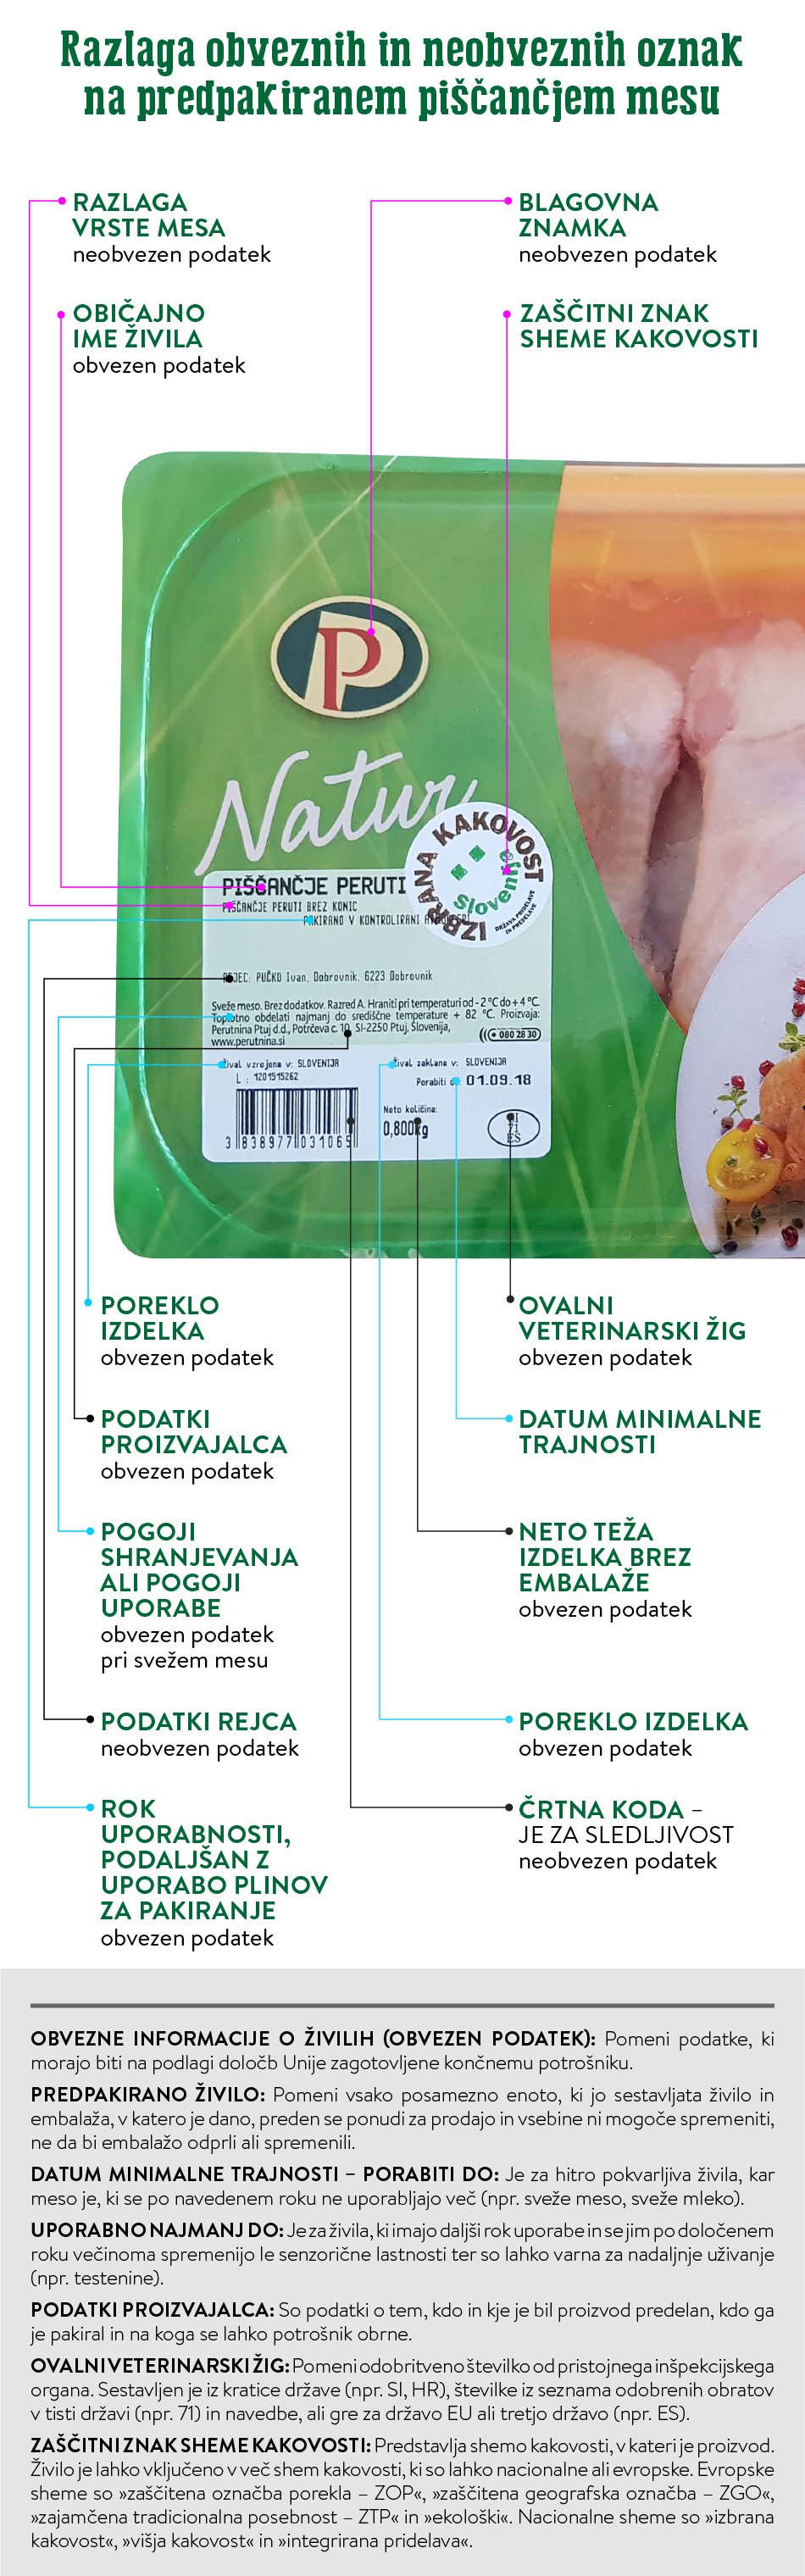 Infografika: oznake na predpakiranem perutninskem mesu